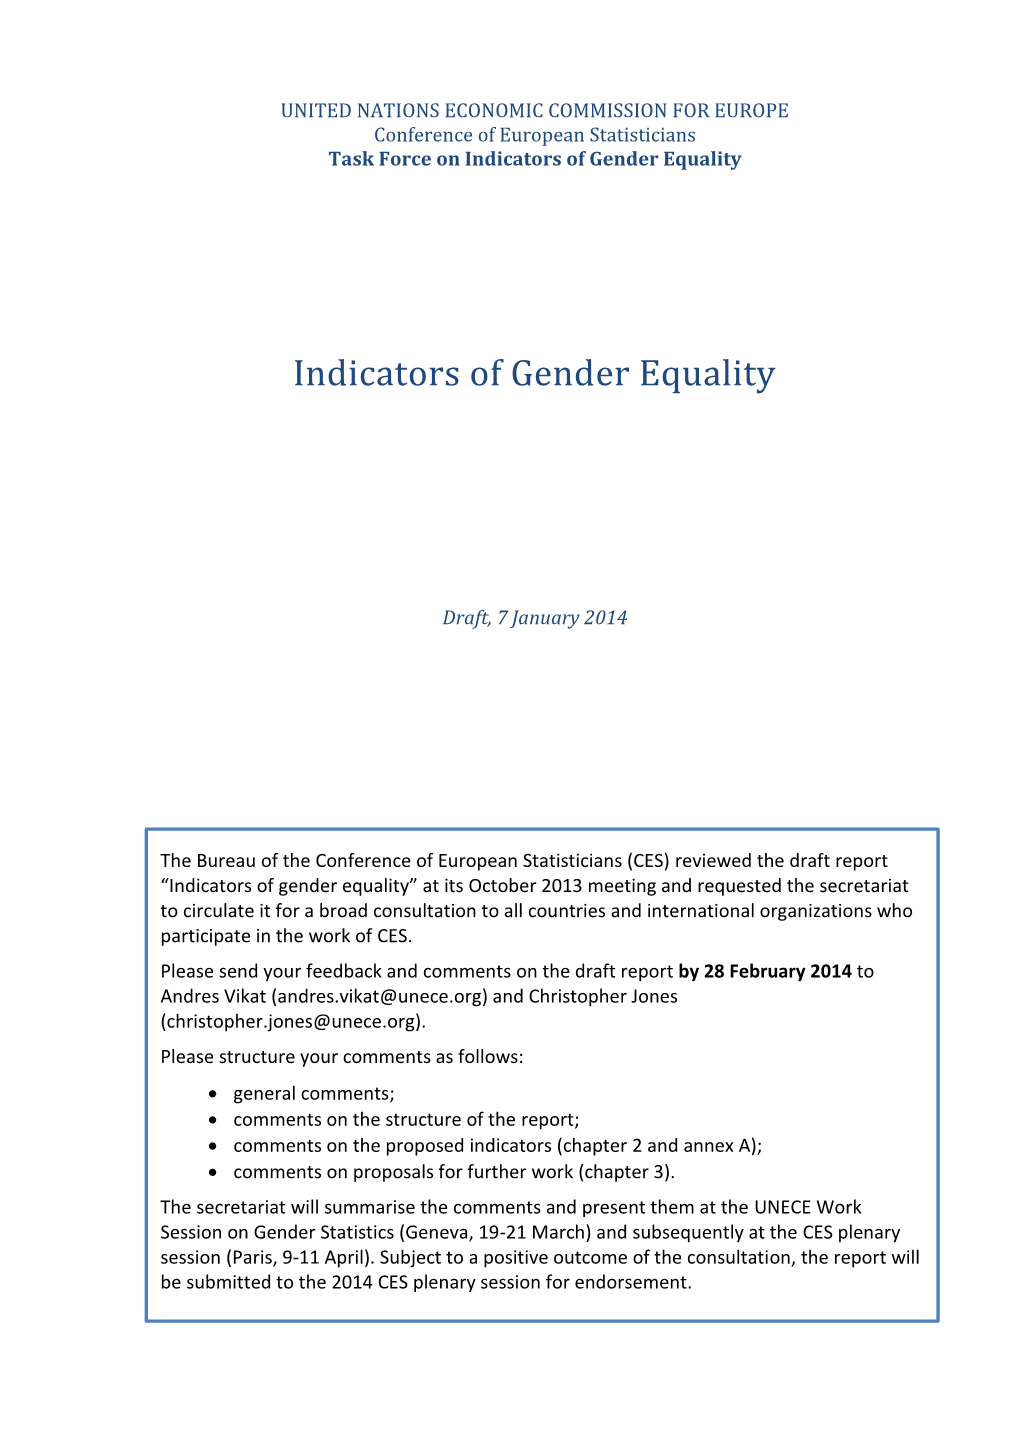 Indicators of Gender Equality